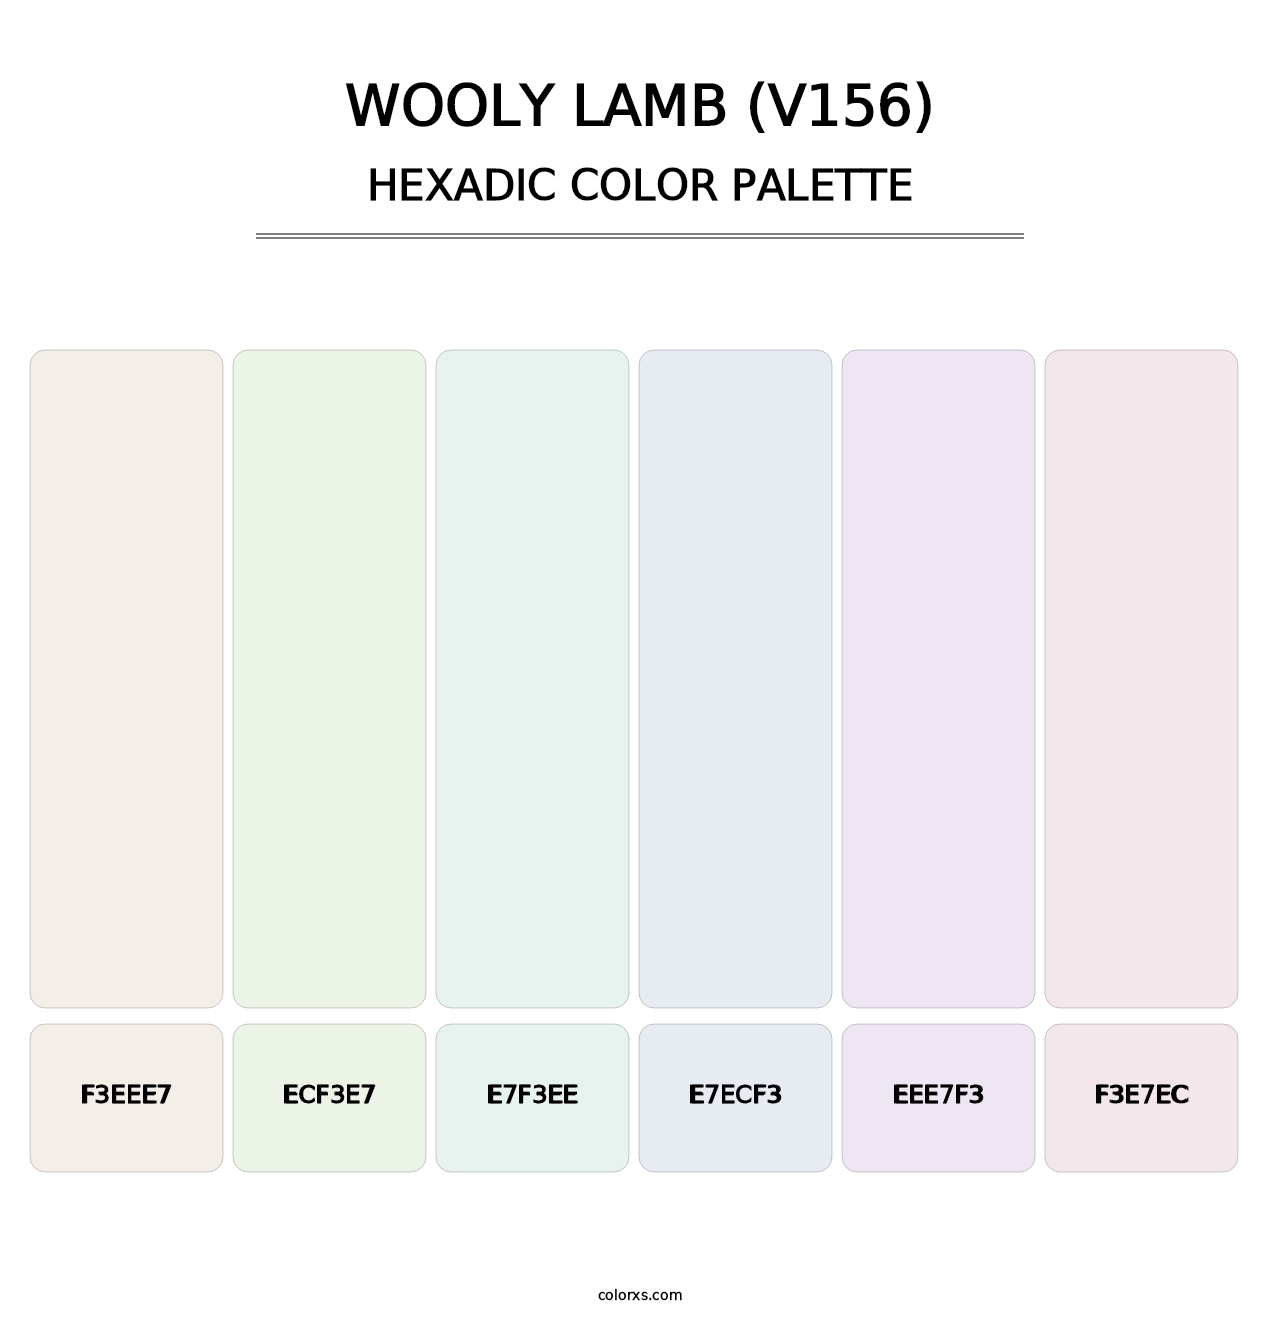 Wooly Lamb (V156) - Hexadic Color Palette